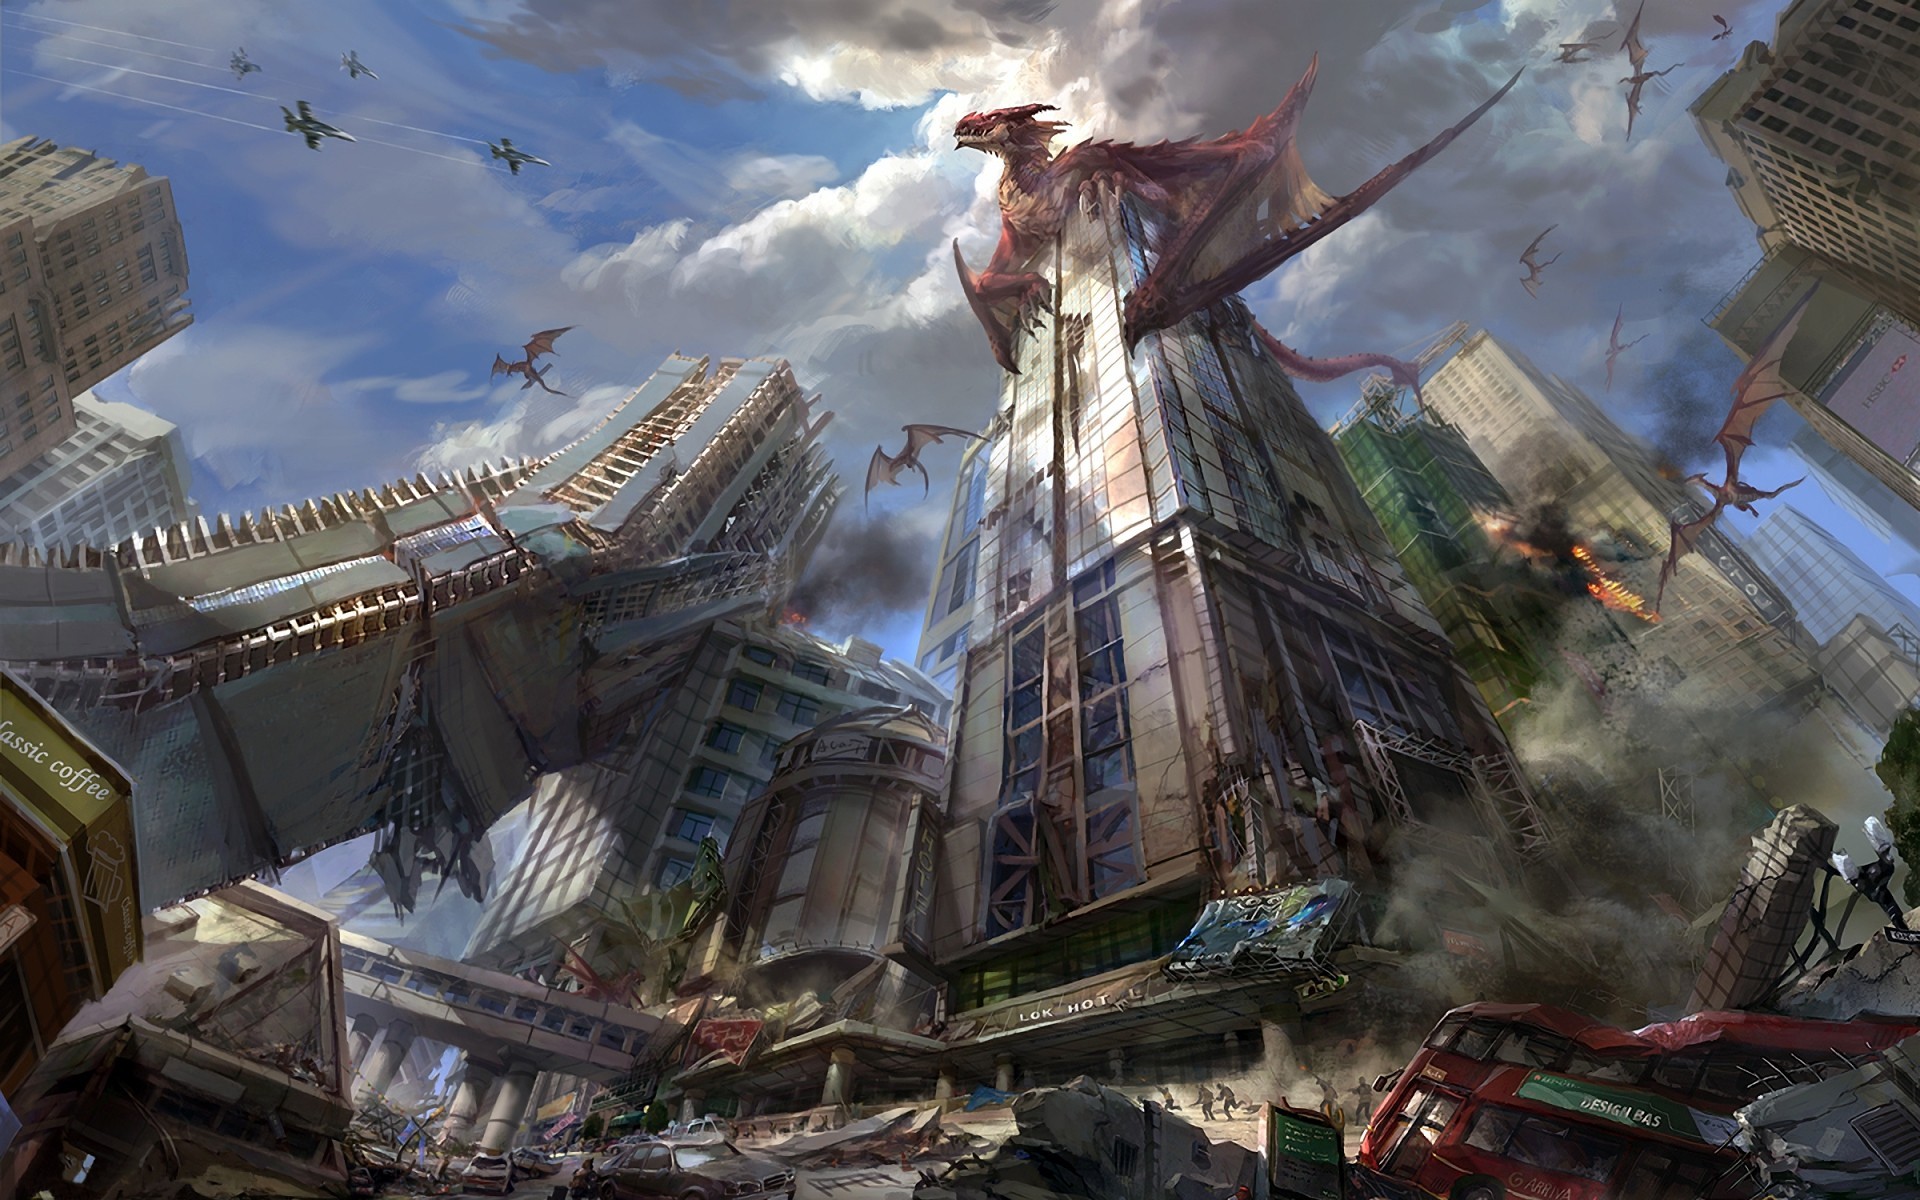 General 1920x1200 fantasy art dragon destruction jet fighter apocalyptic ruins artwork digital art